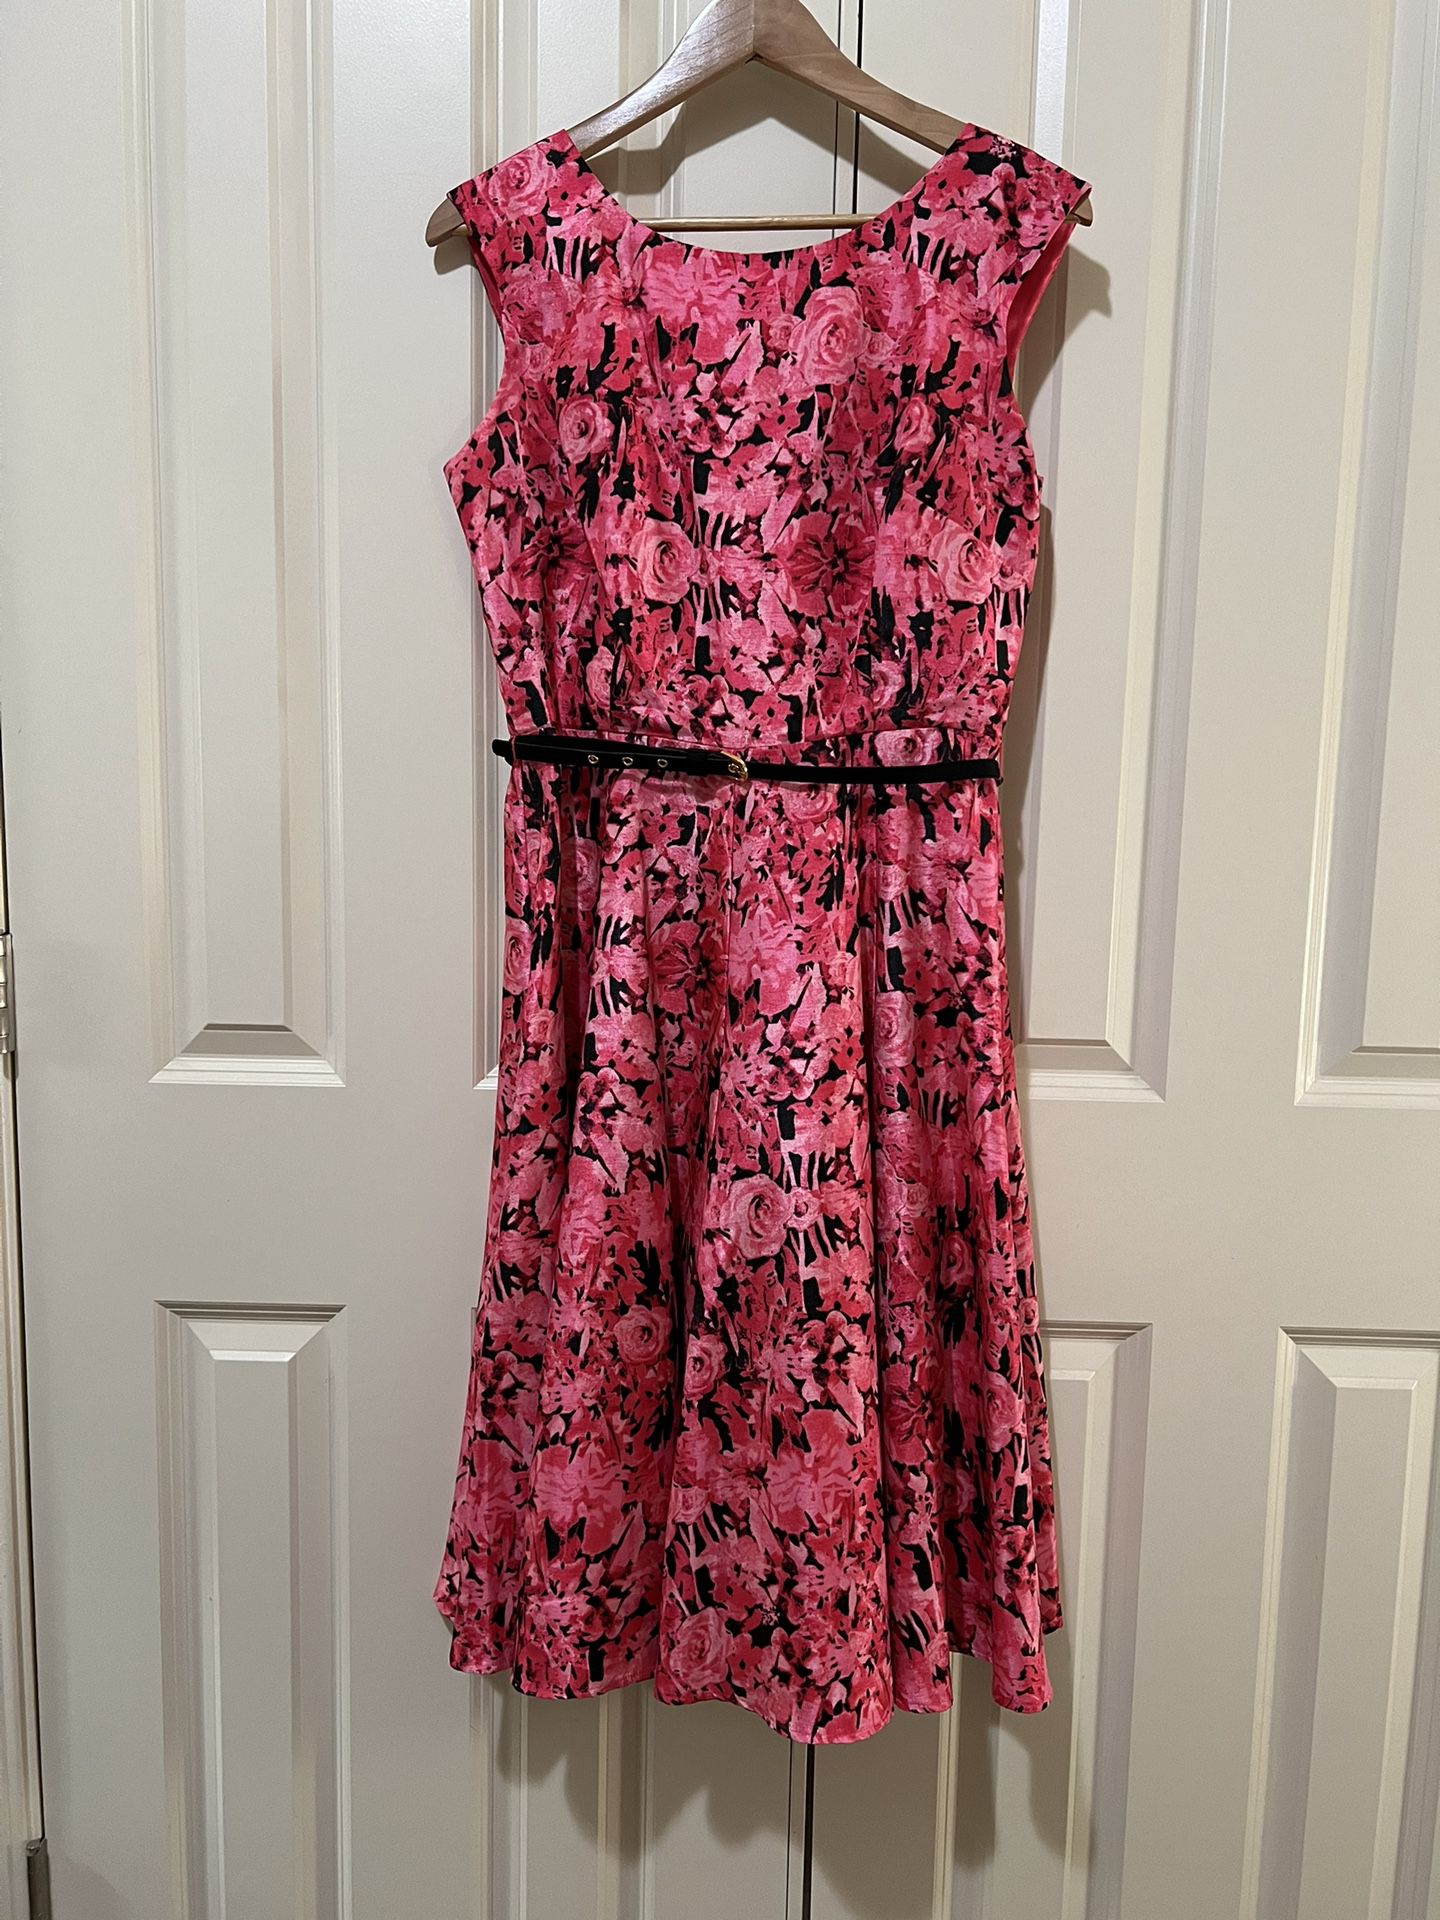 Gabby Skye Dress - Size 10 - Bright Pink Floral Pattern